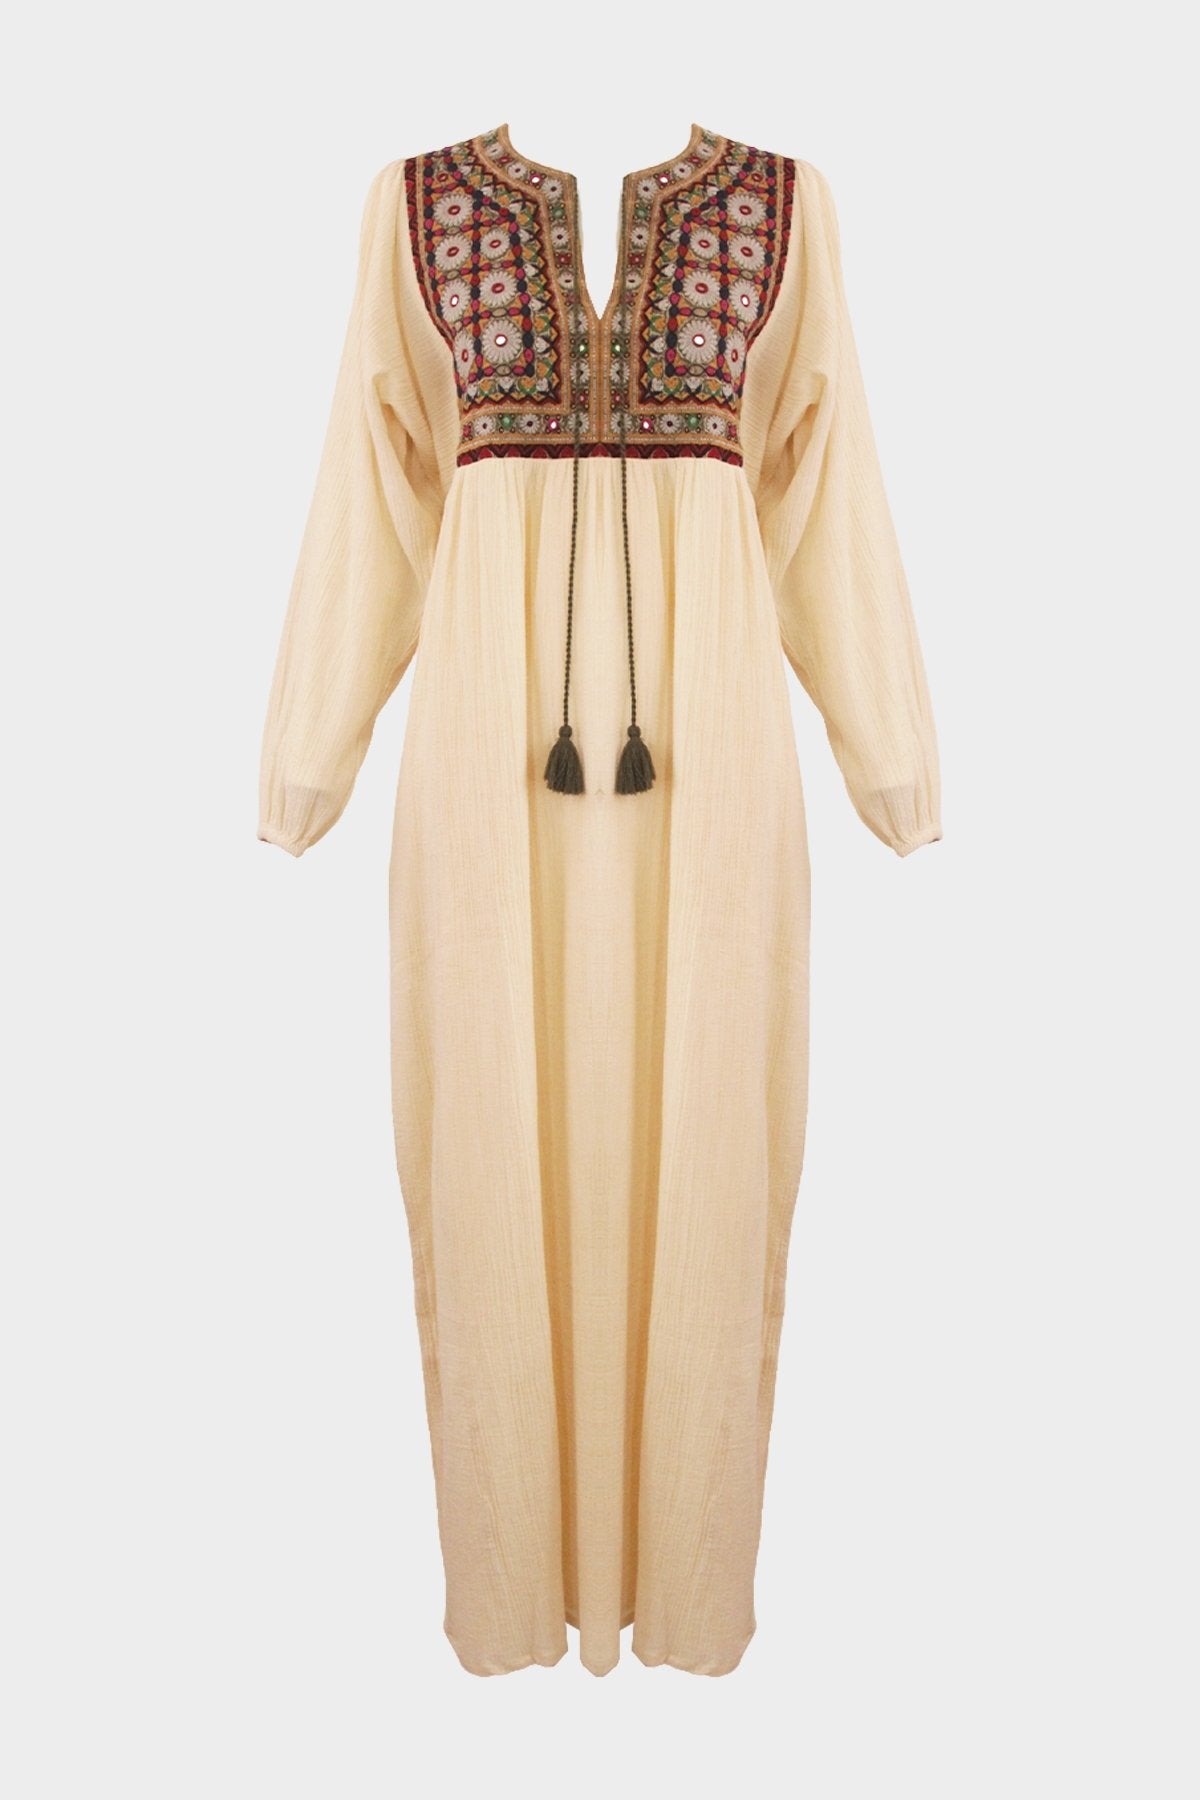 Pallenberg Long Dress in Full Moon - shop-olivia.com